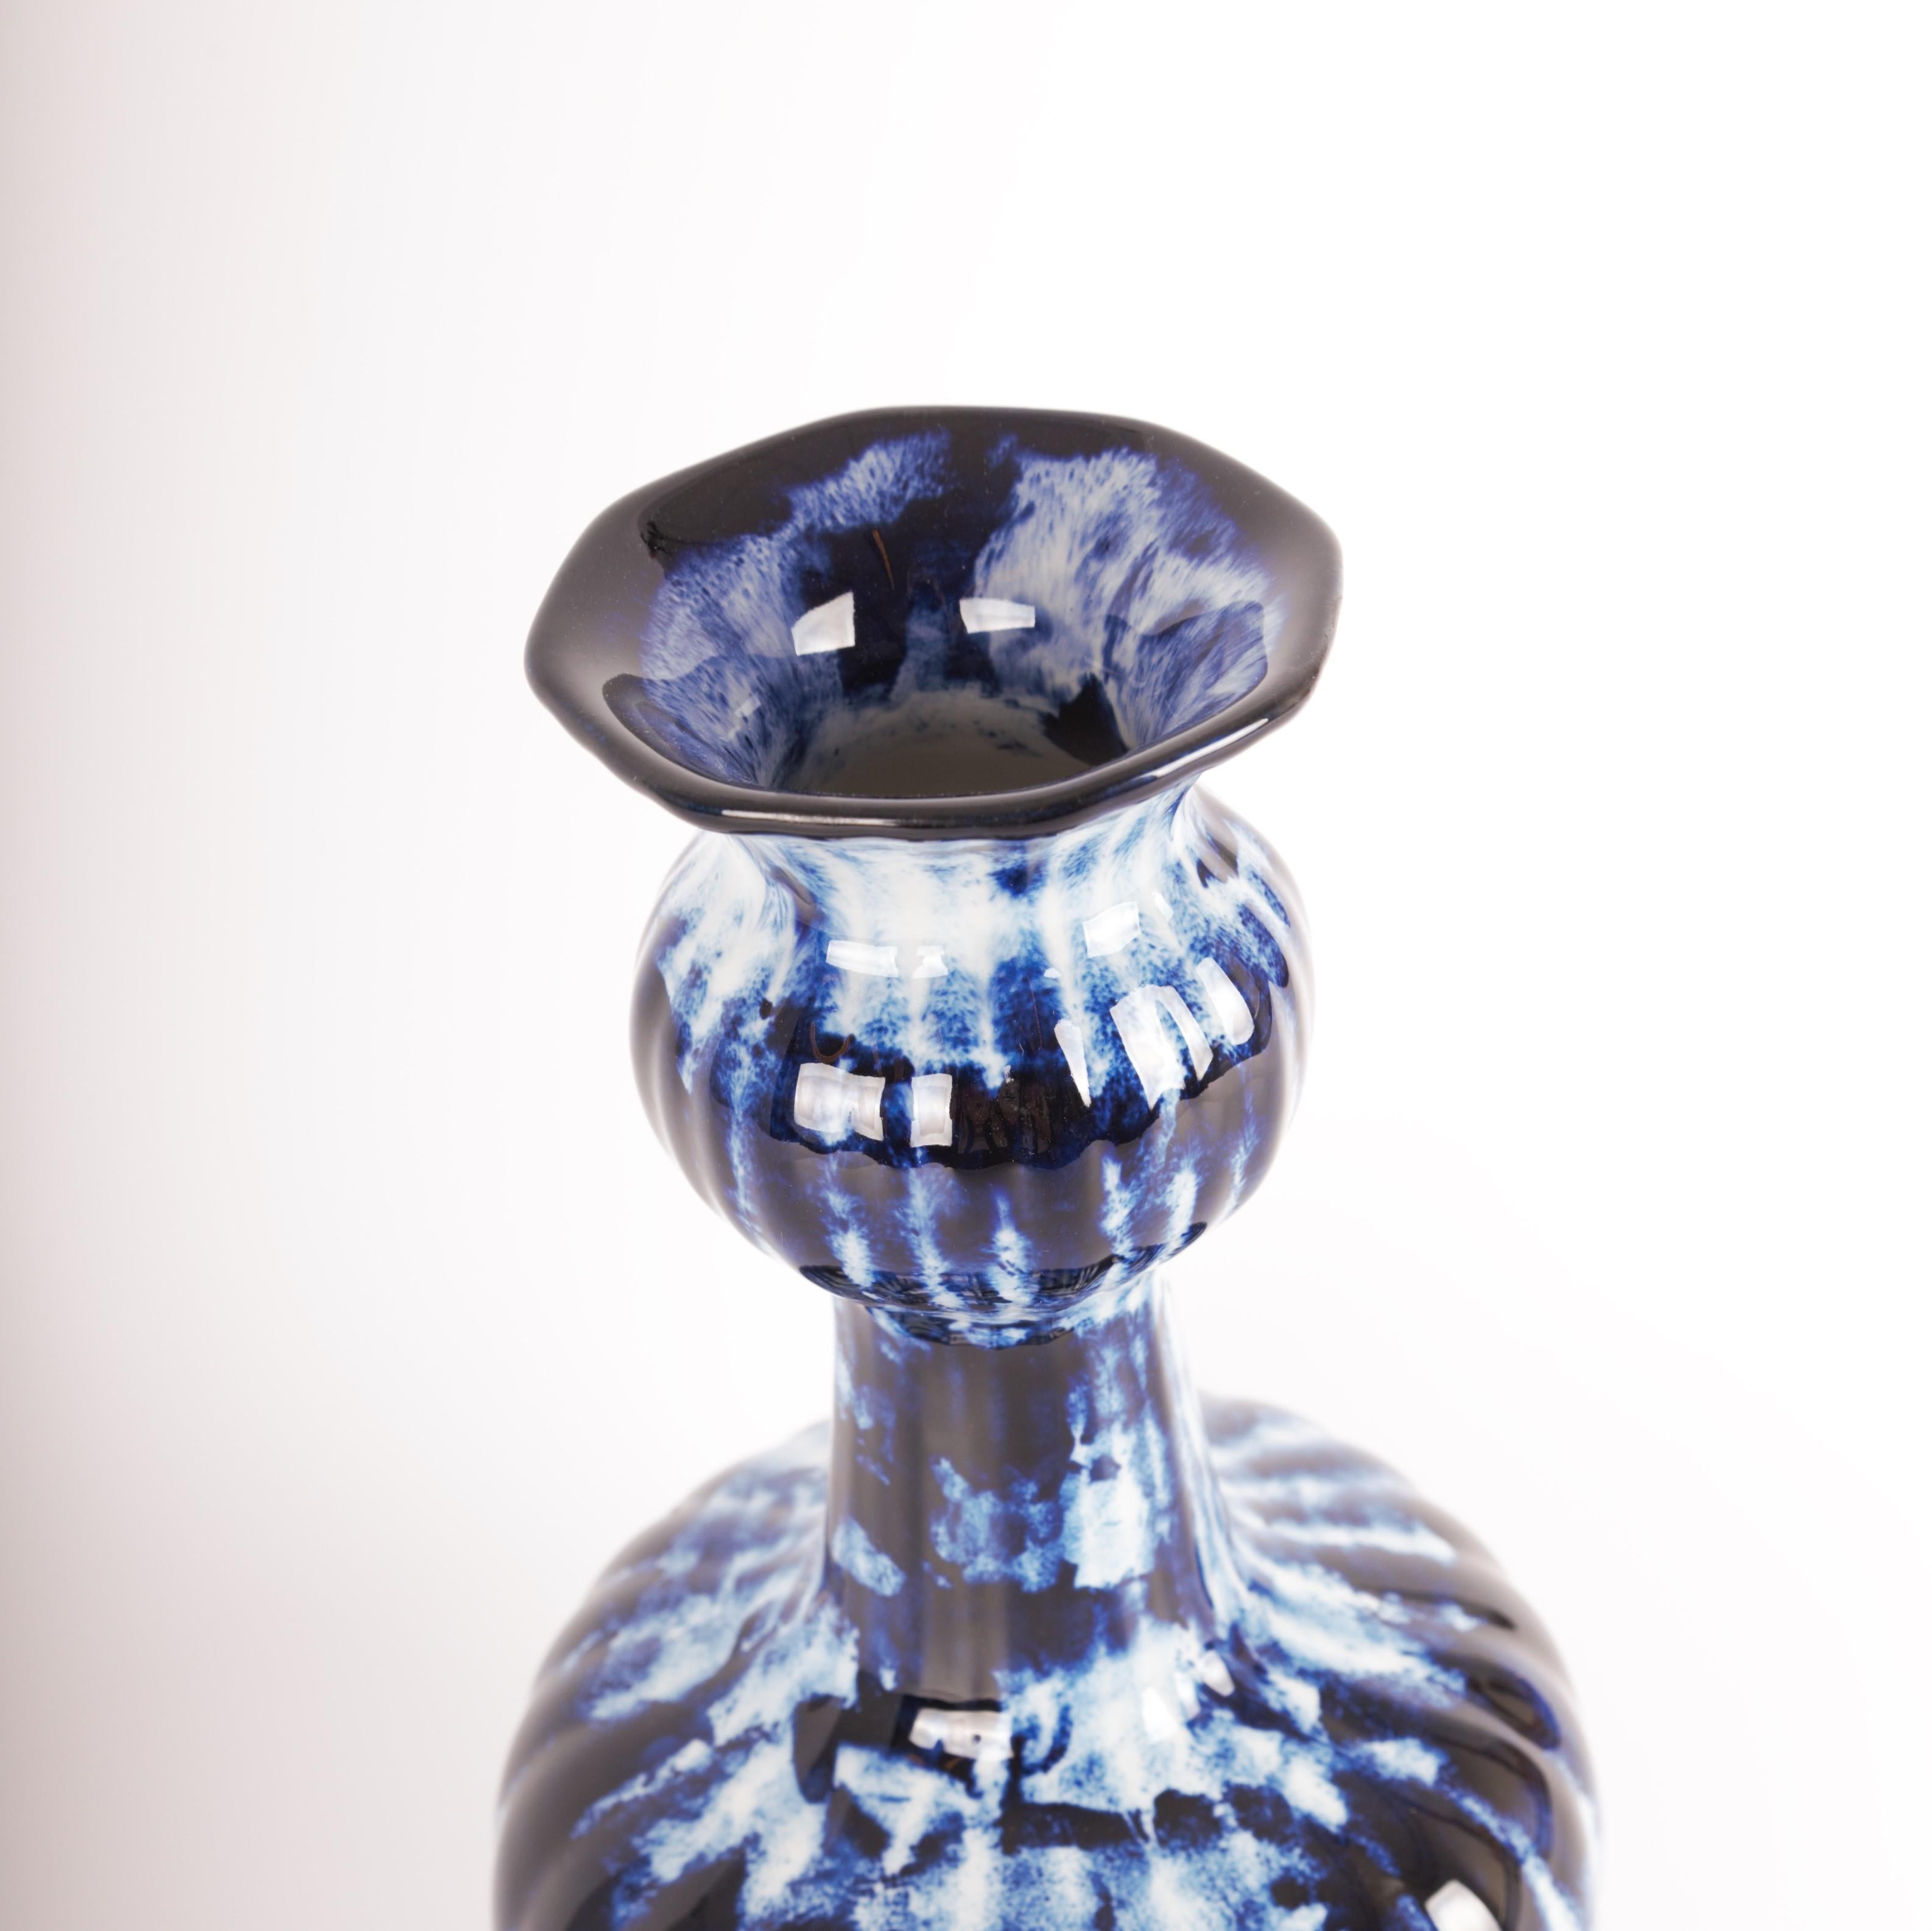 Contemporary Delft Blue Longneck Vase #2, by Marcel Wanders, Hand Painted, 2006, Unique For Sale